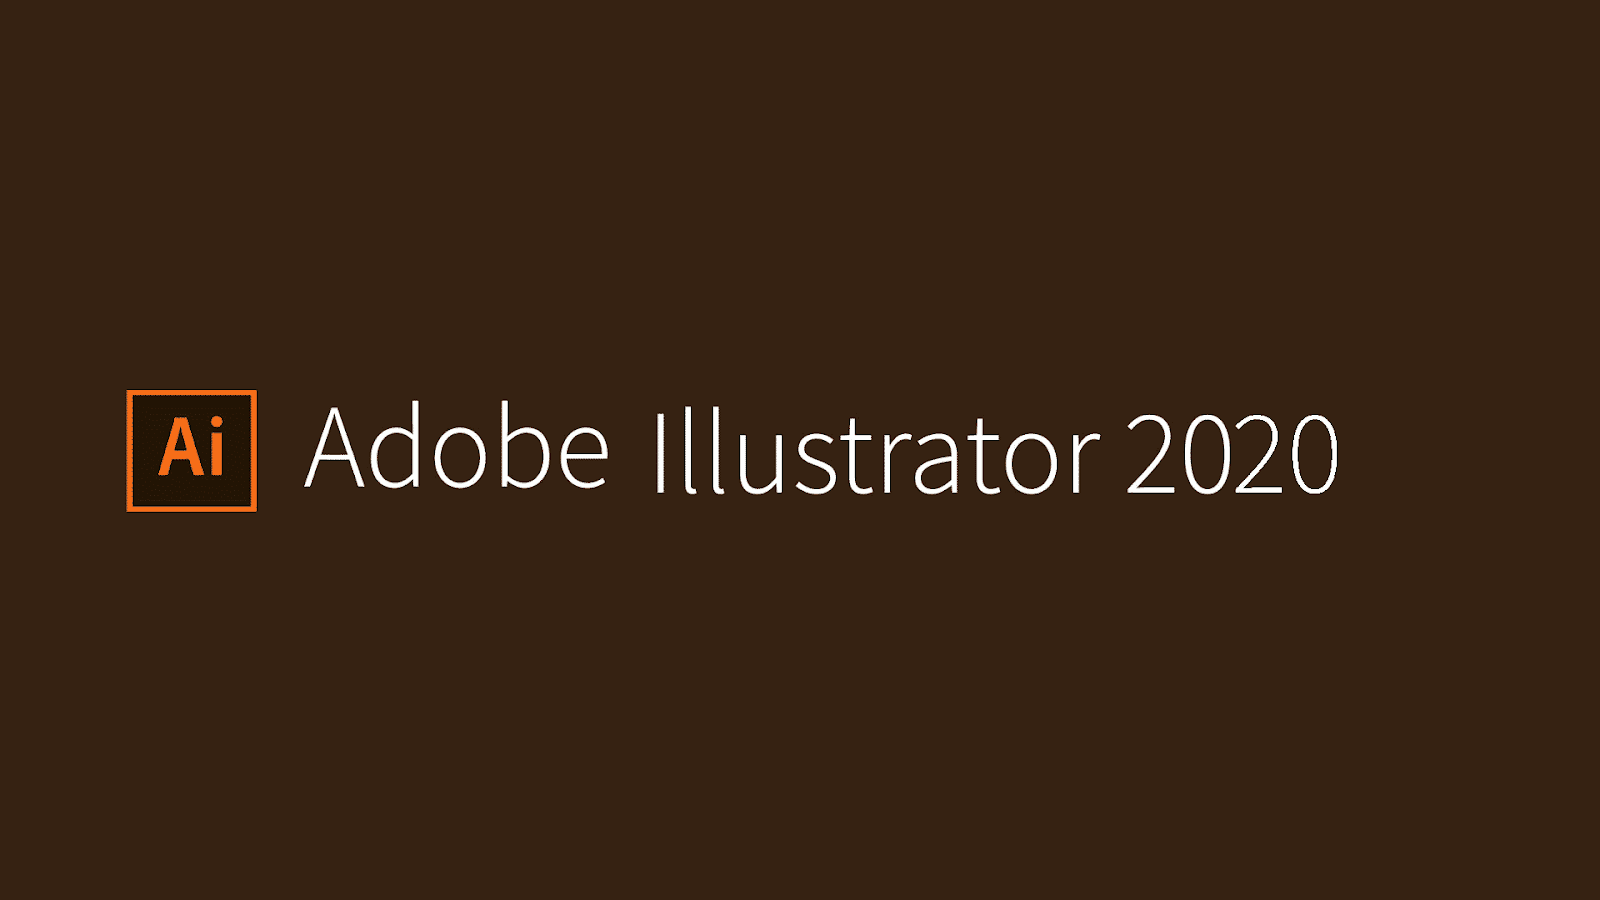 Where To Download Adobe Illustrator Software Free Mac